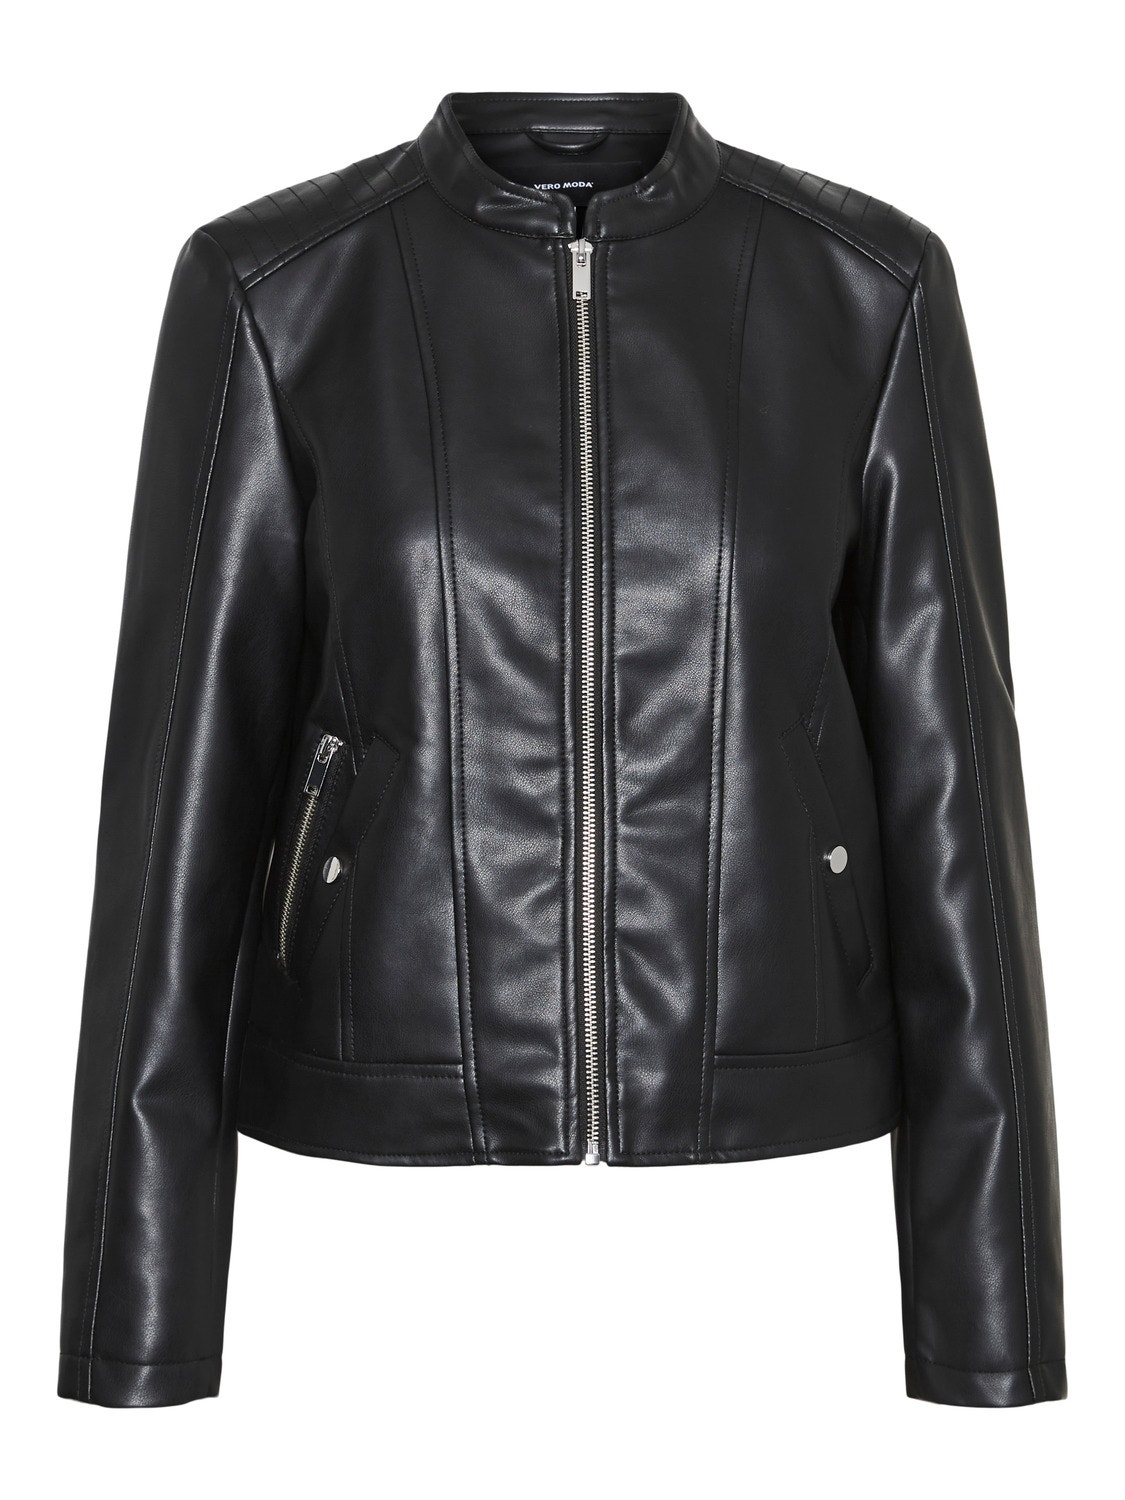 Vero Moda VMFINE Jacket -Black - 10291002